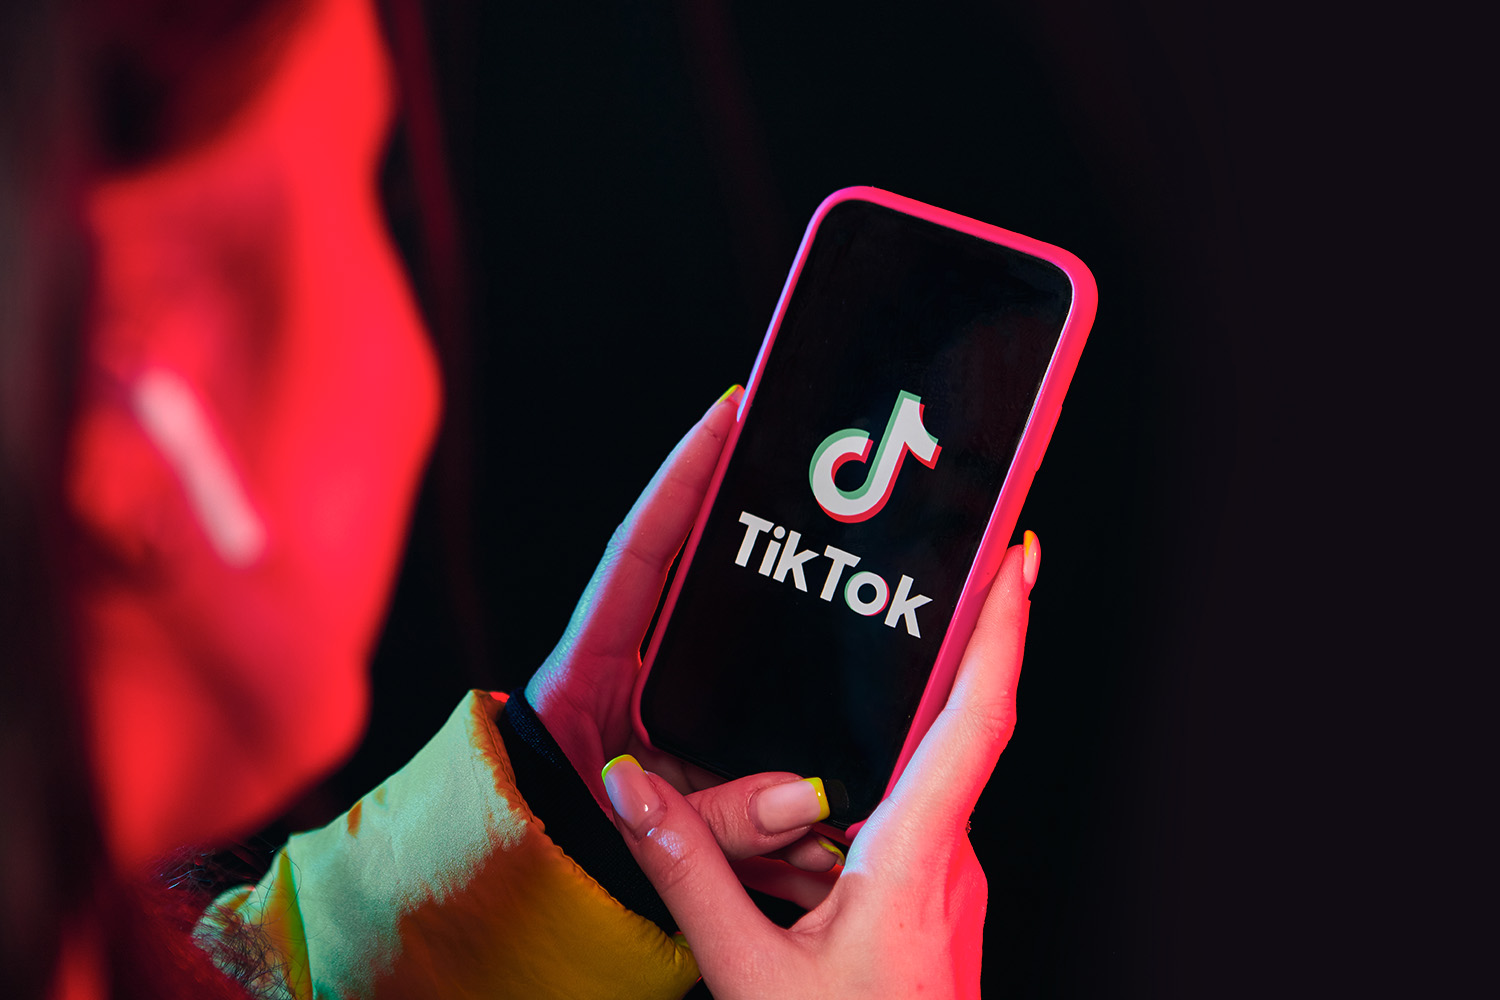 TikTok-on-phone-screen